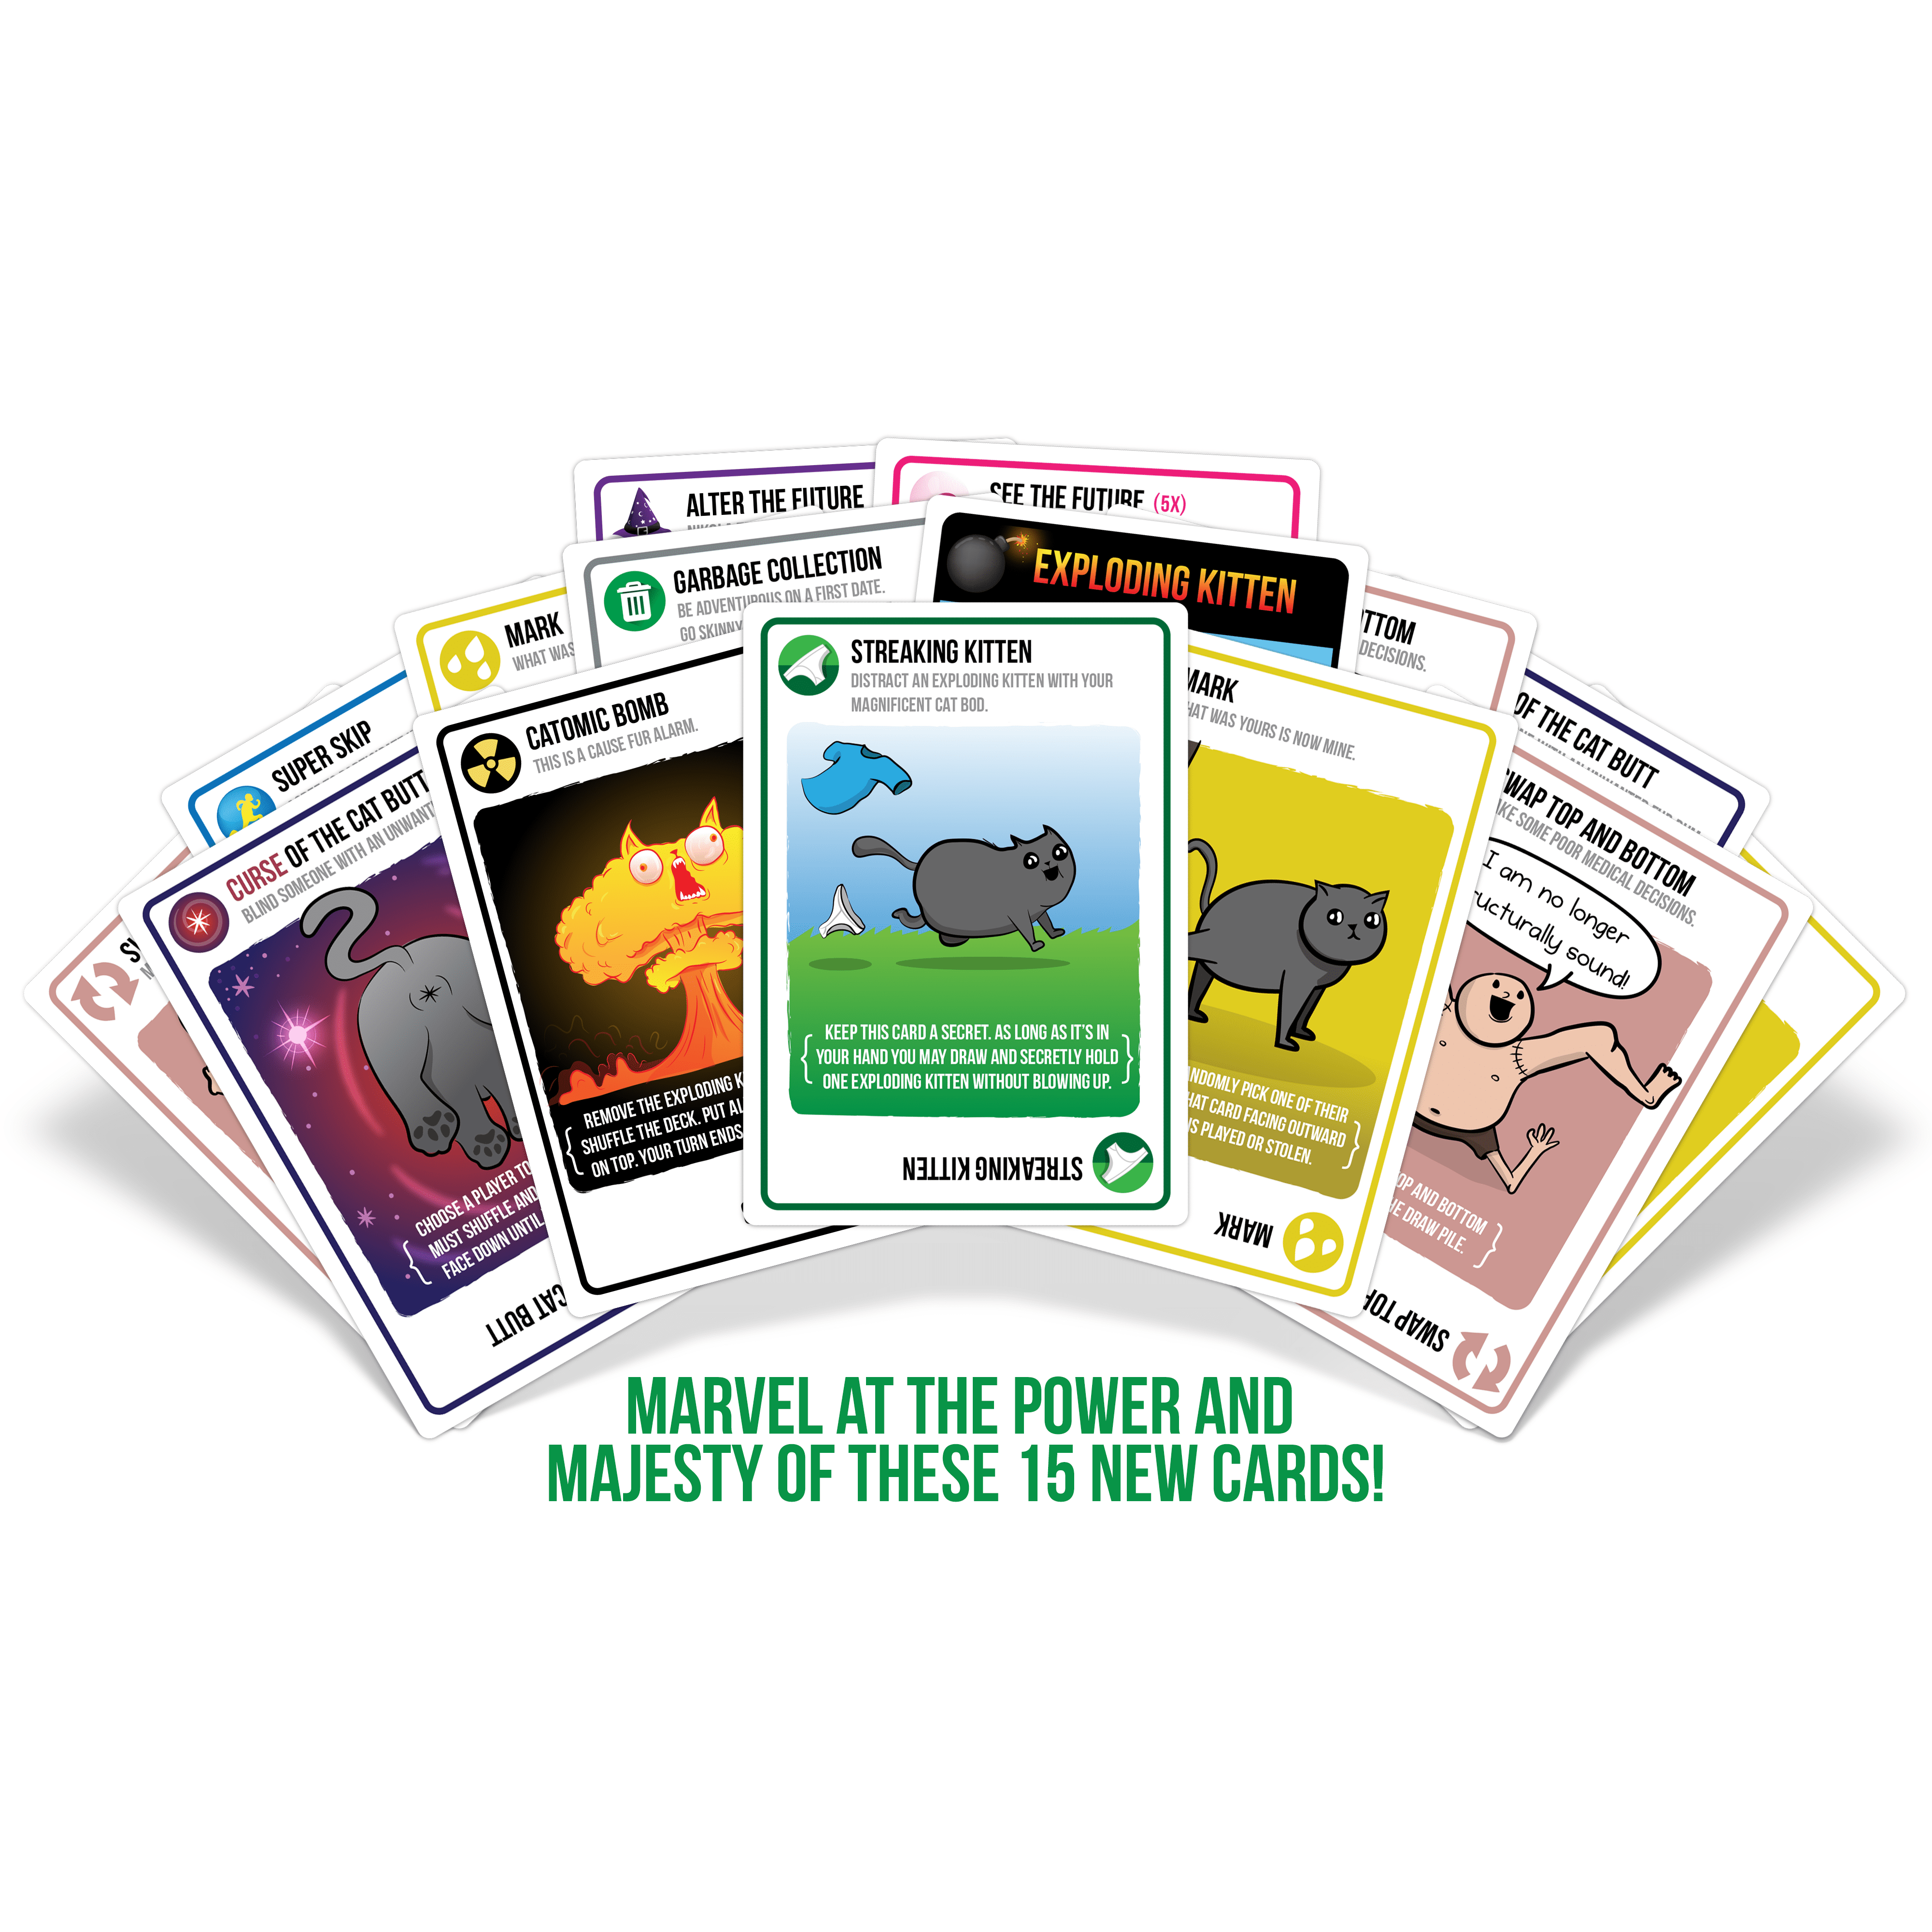 Exploding Kittens Card Game Streaking Kittens Expansion Set for sale online 